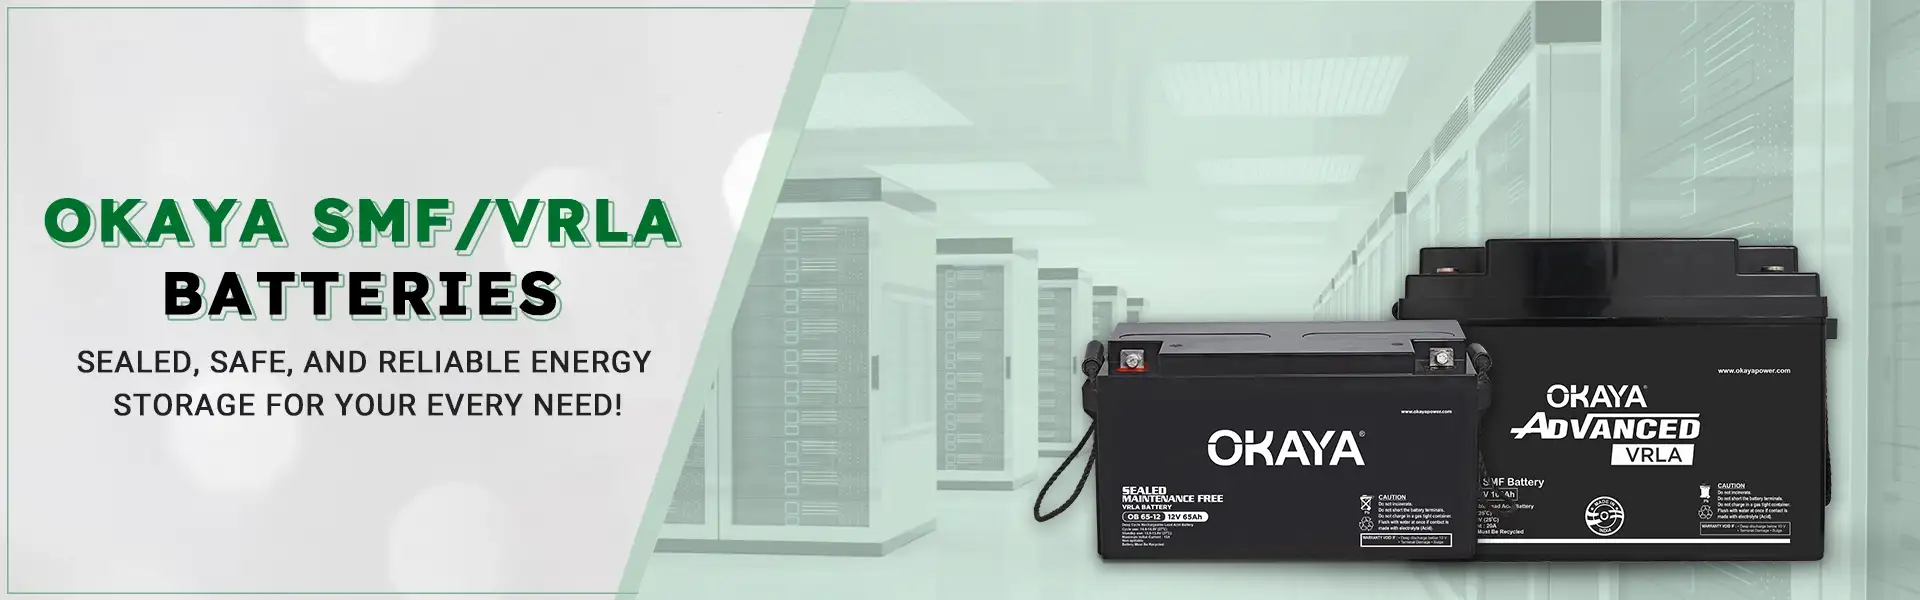 Okaya SMF/VRLA batteries with energy storage solutions